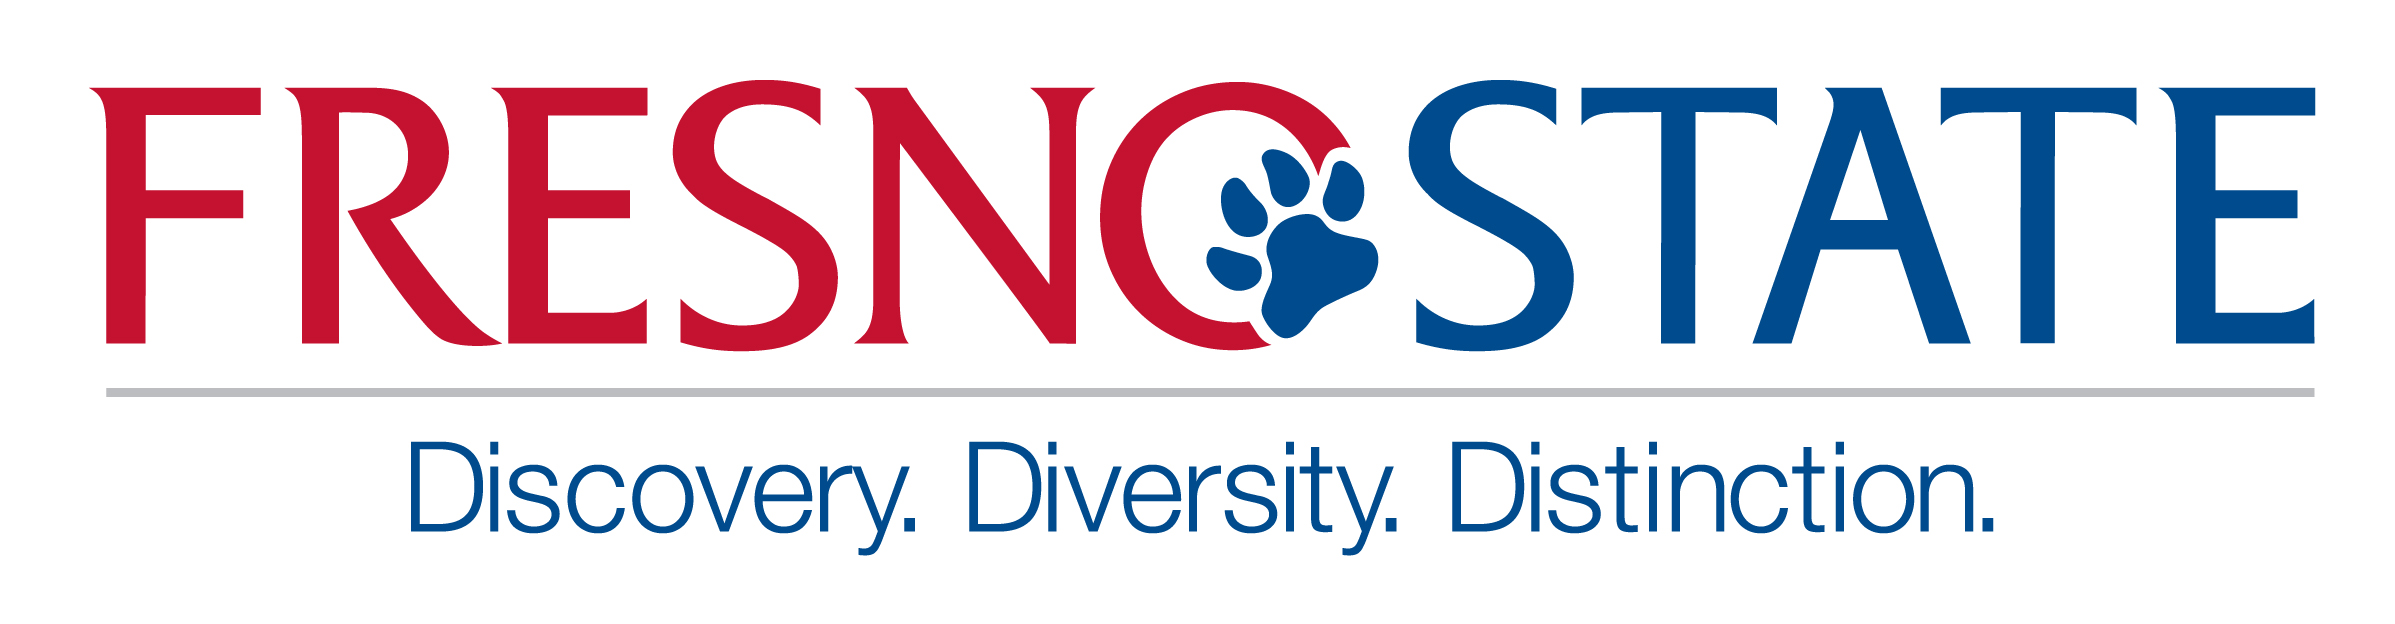 Fresno State logo that reads: Fresno State. Discovery, Diversity, Distinction. 